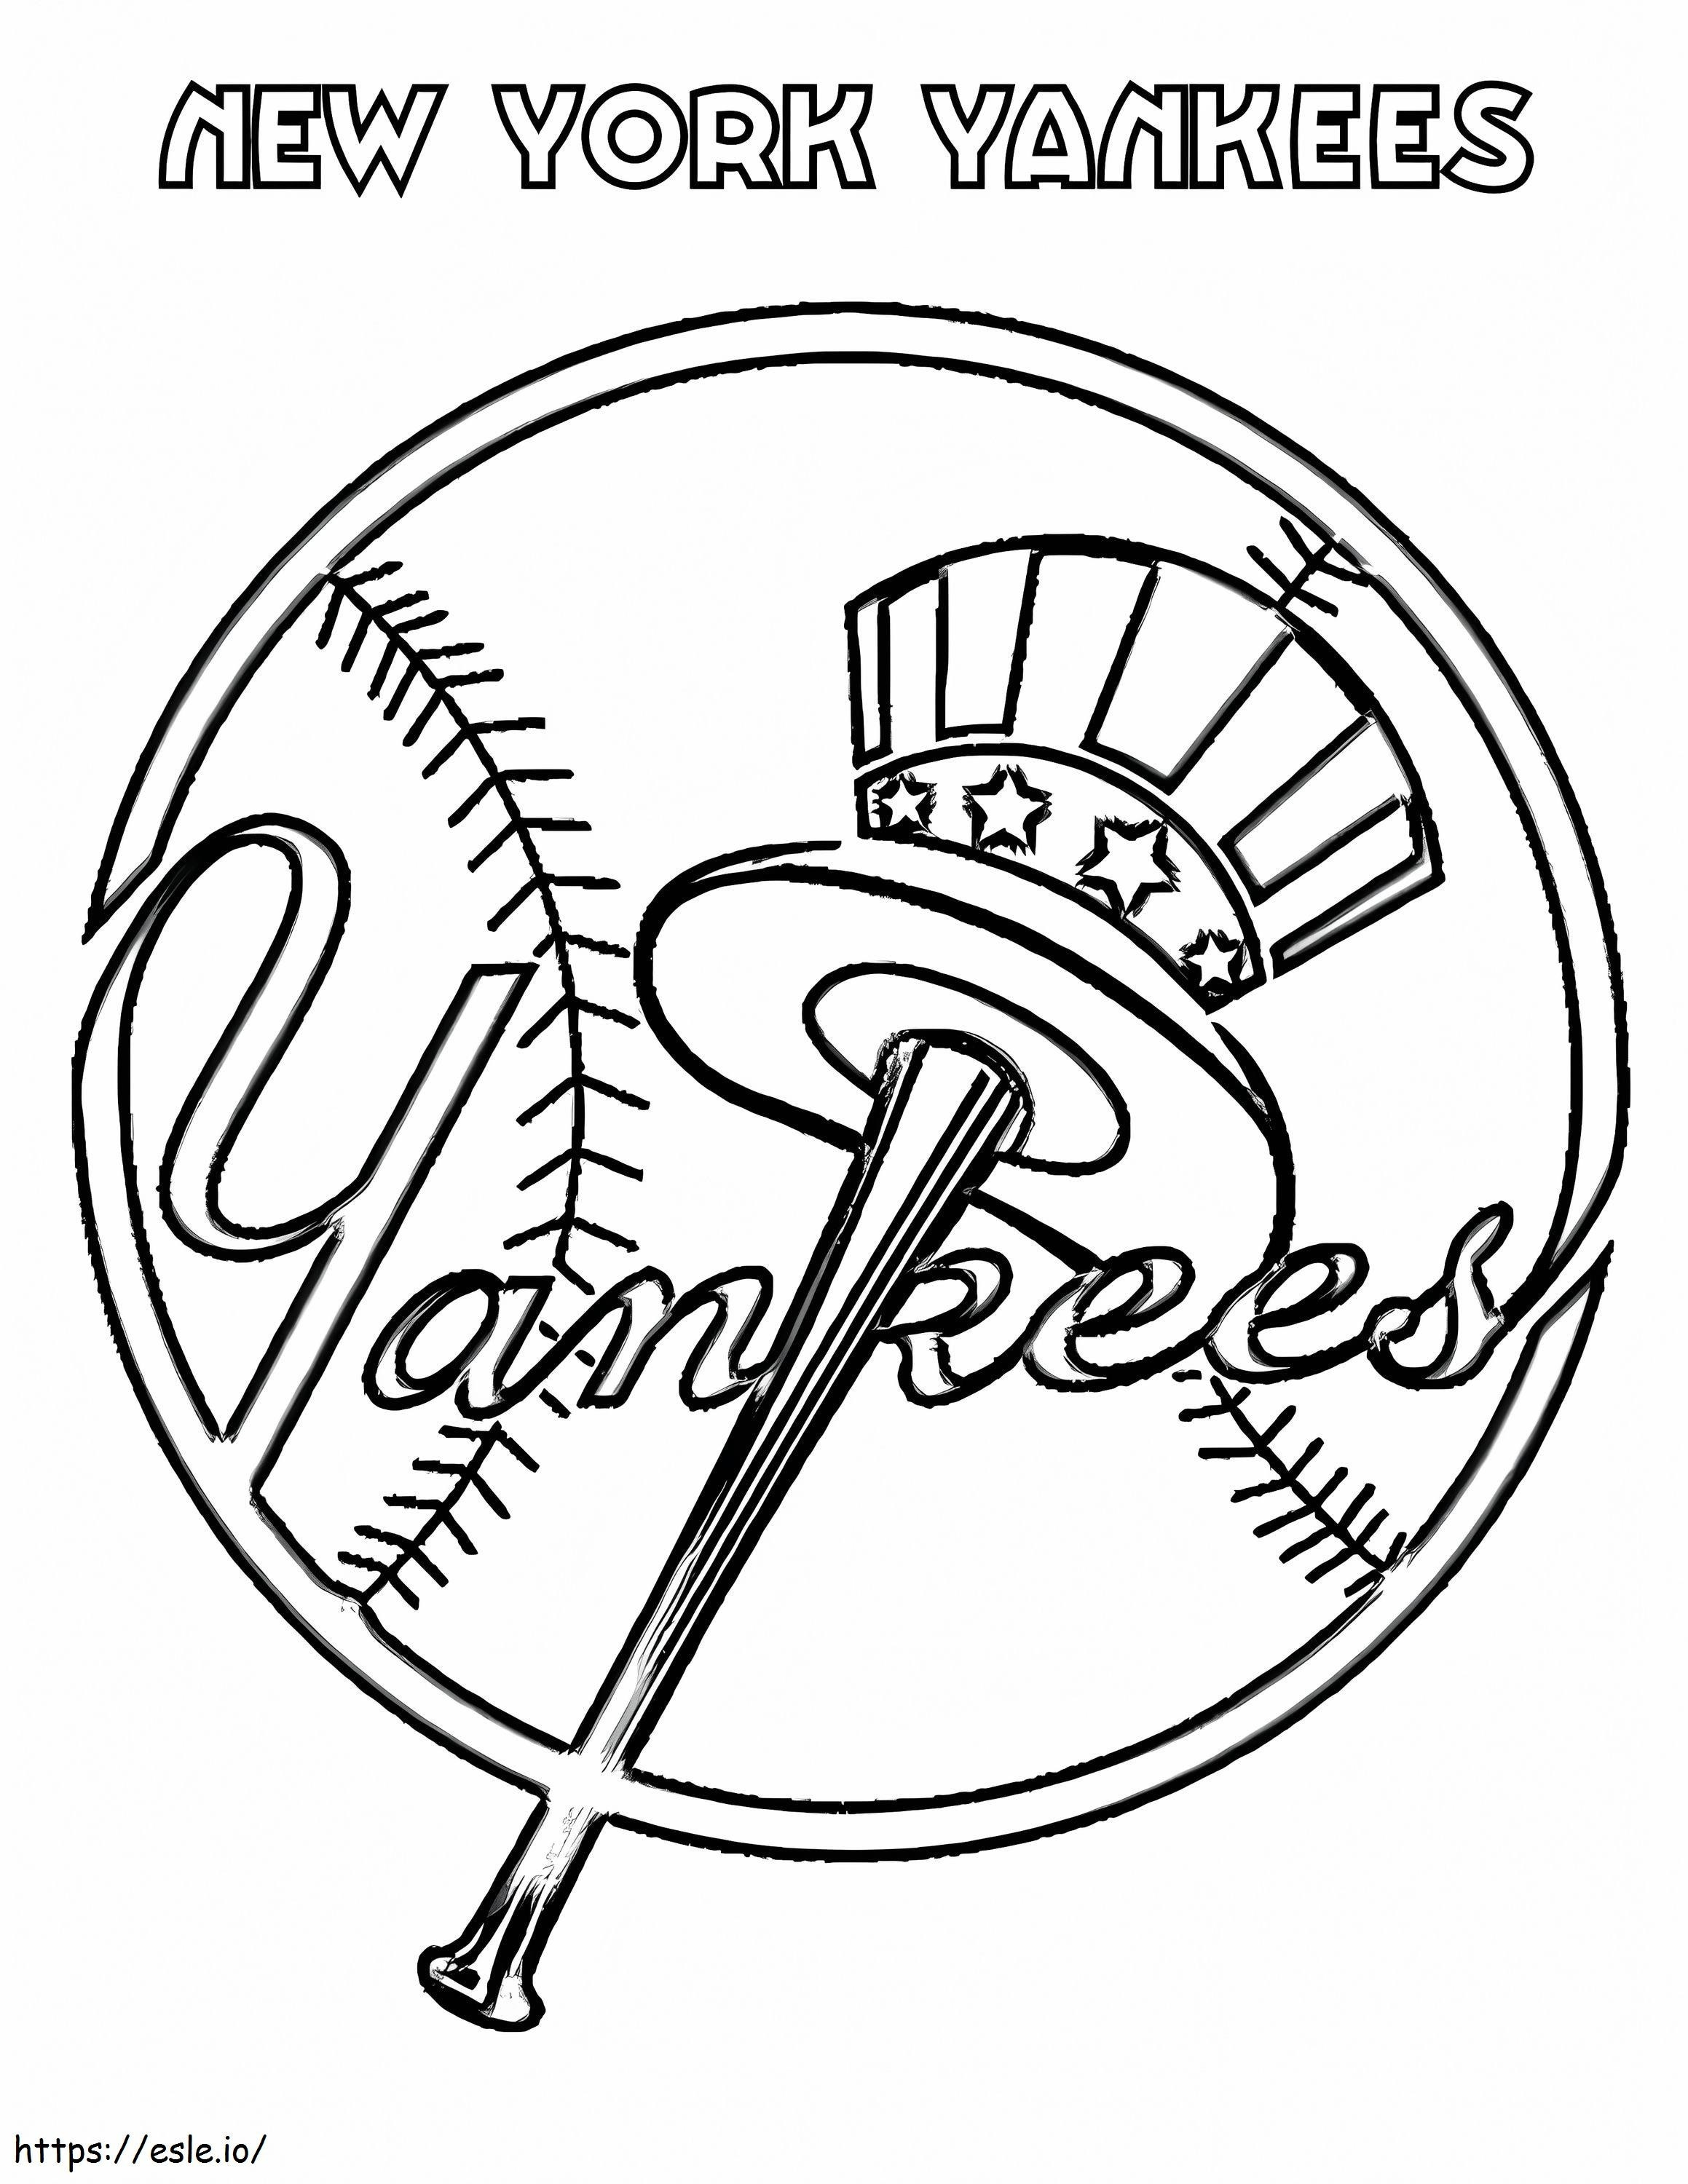 New York Yankees de colorat